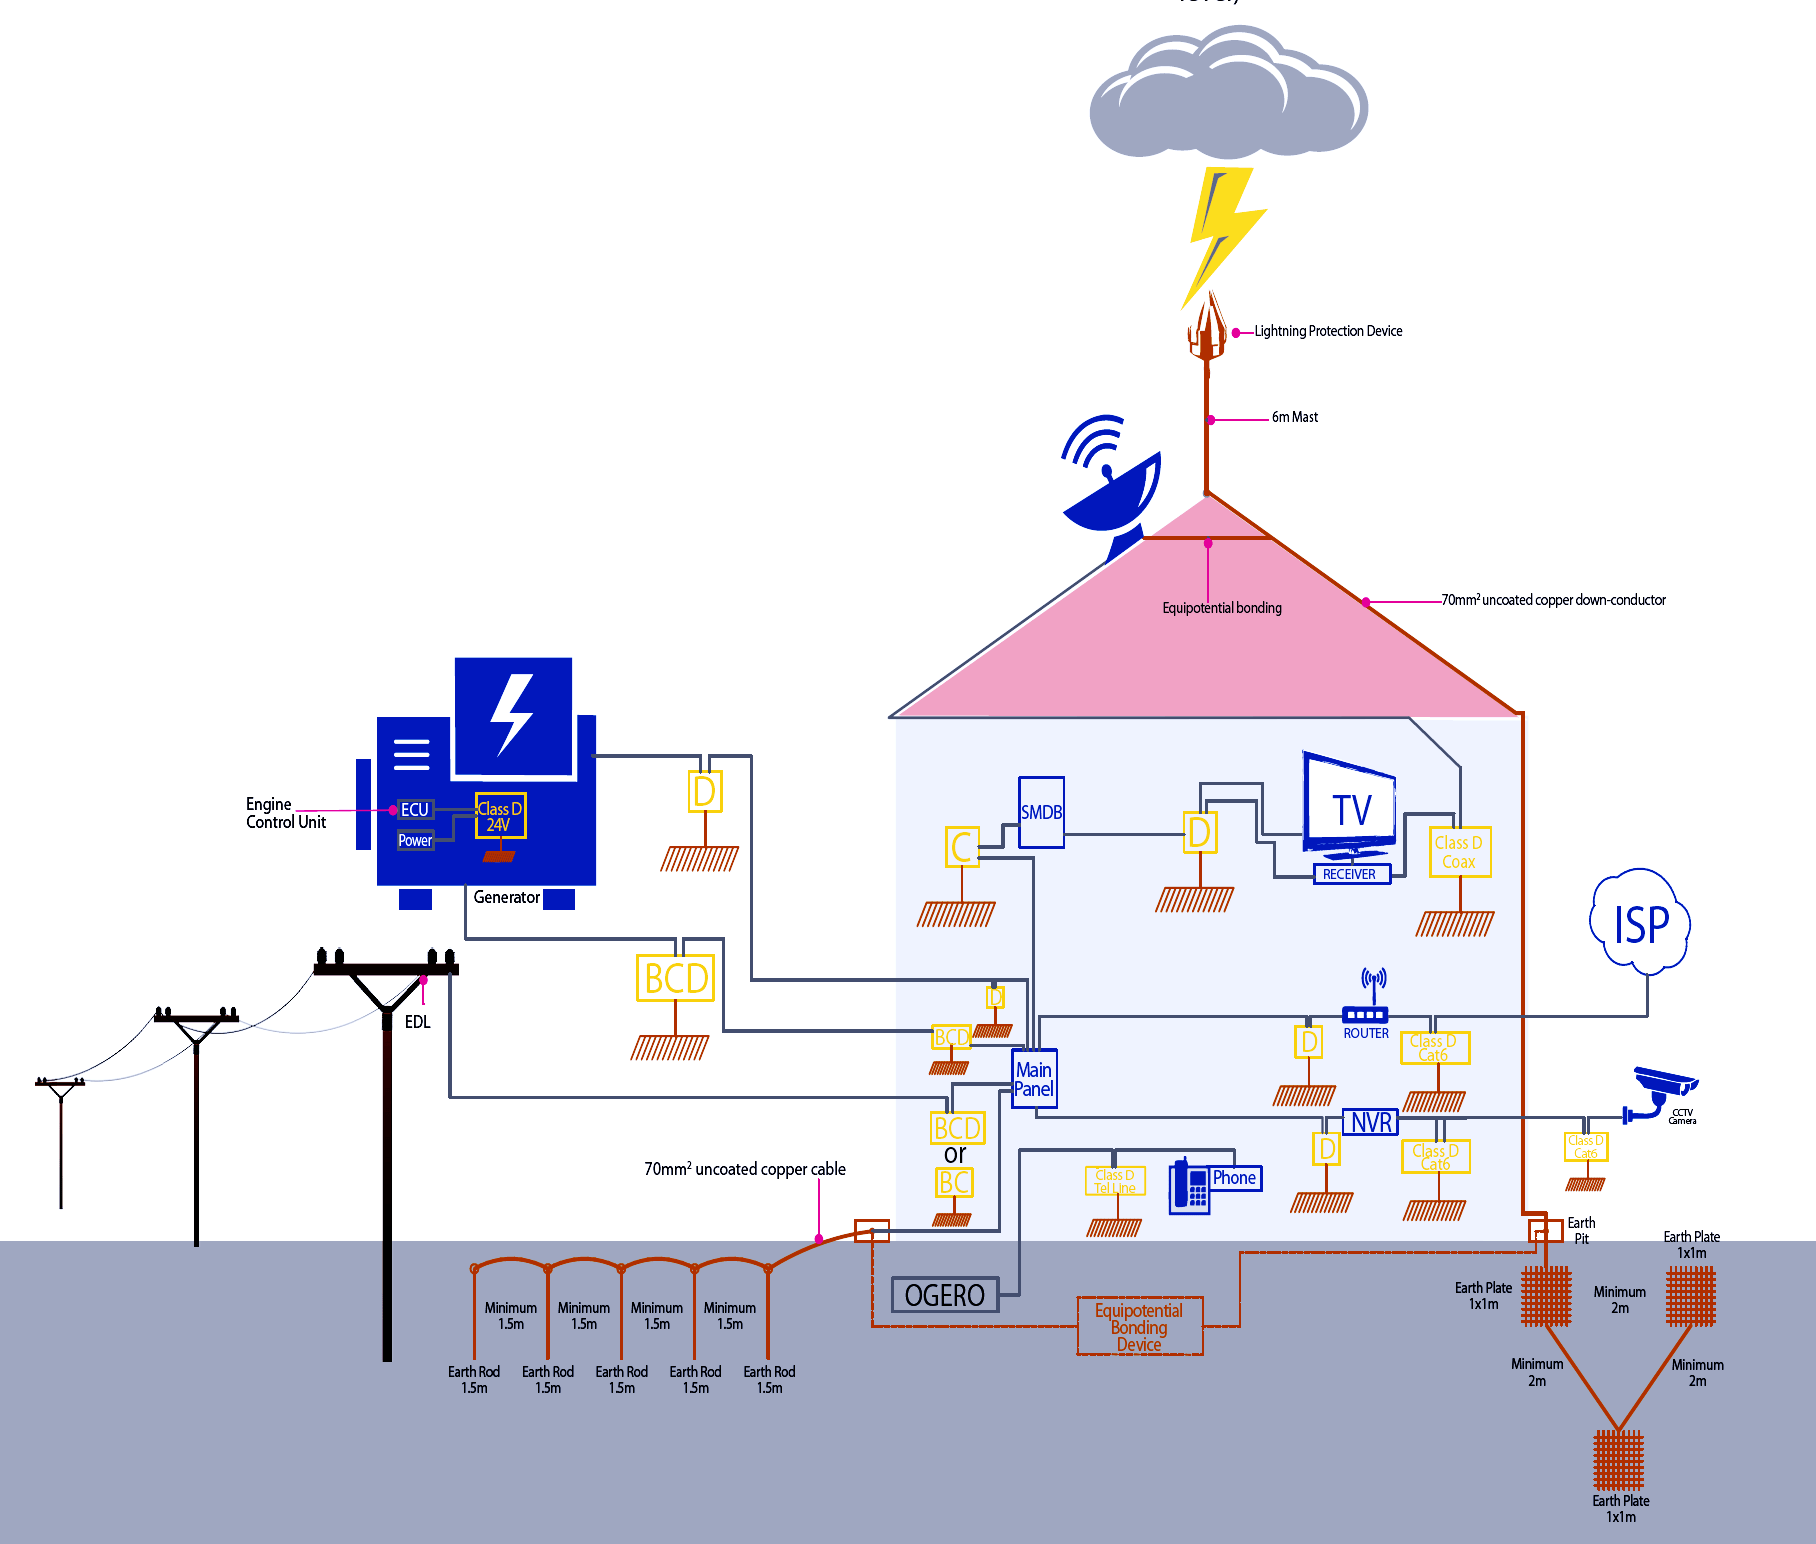 Lightning protection system types - windmyte